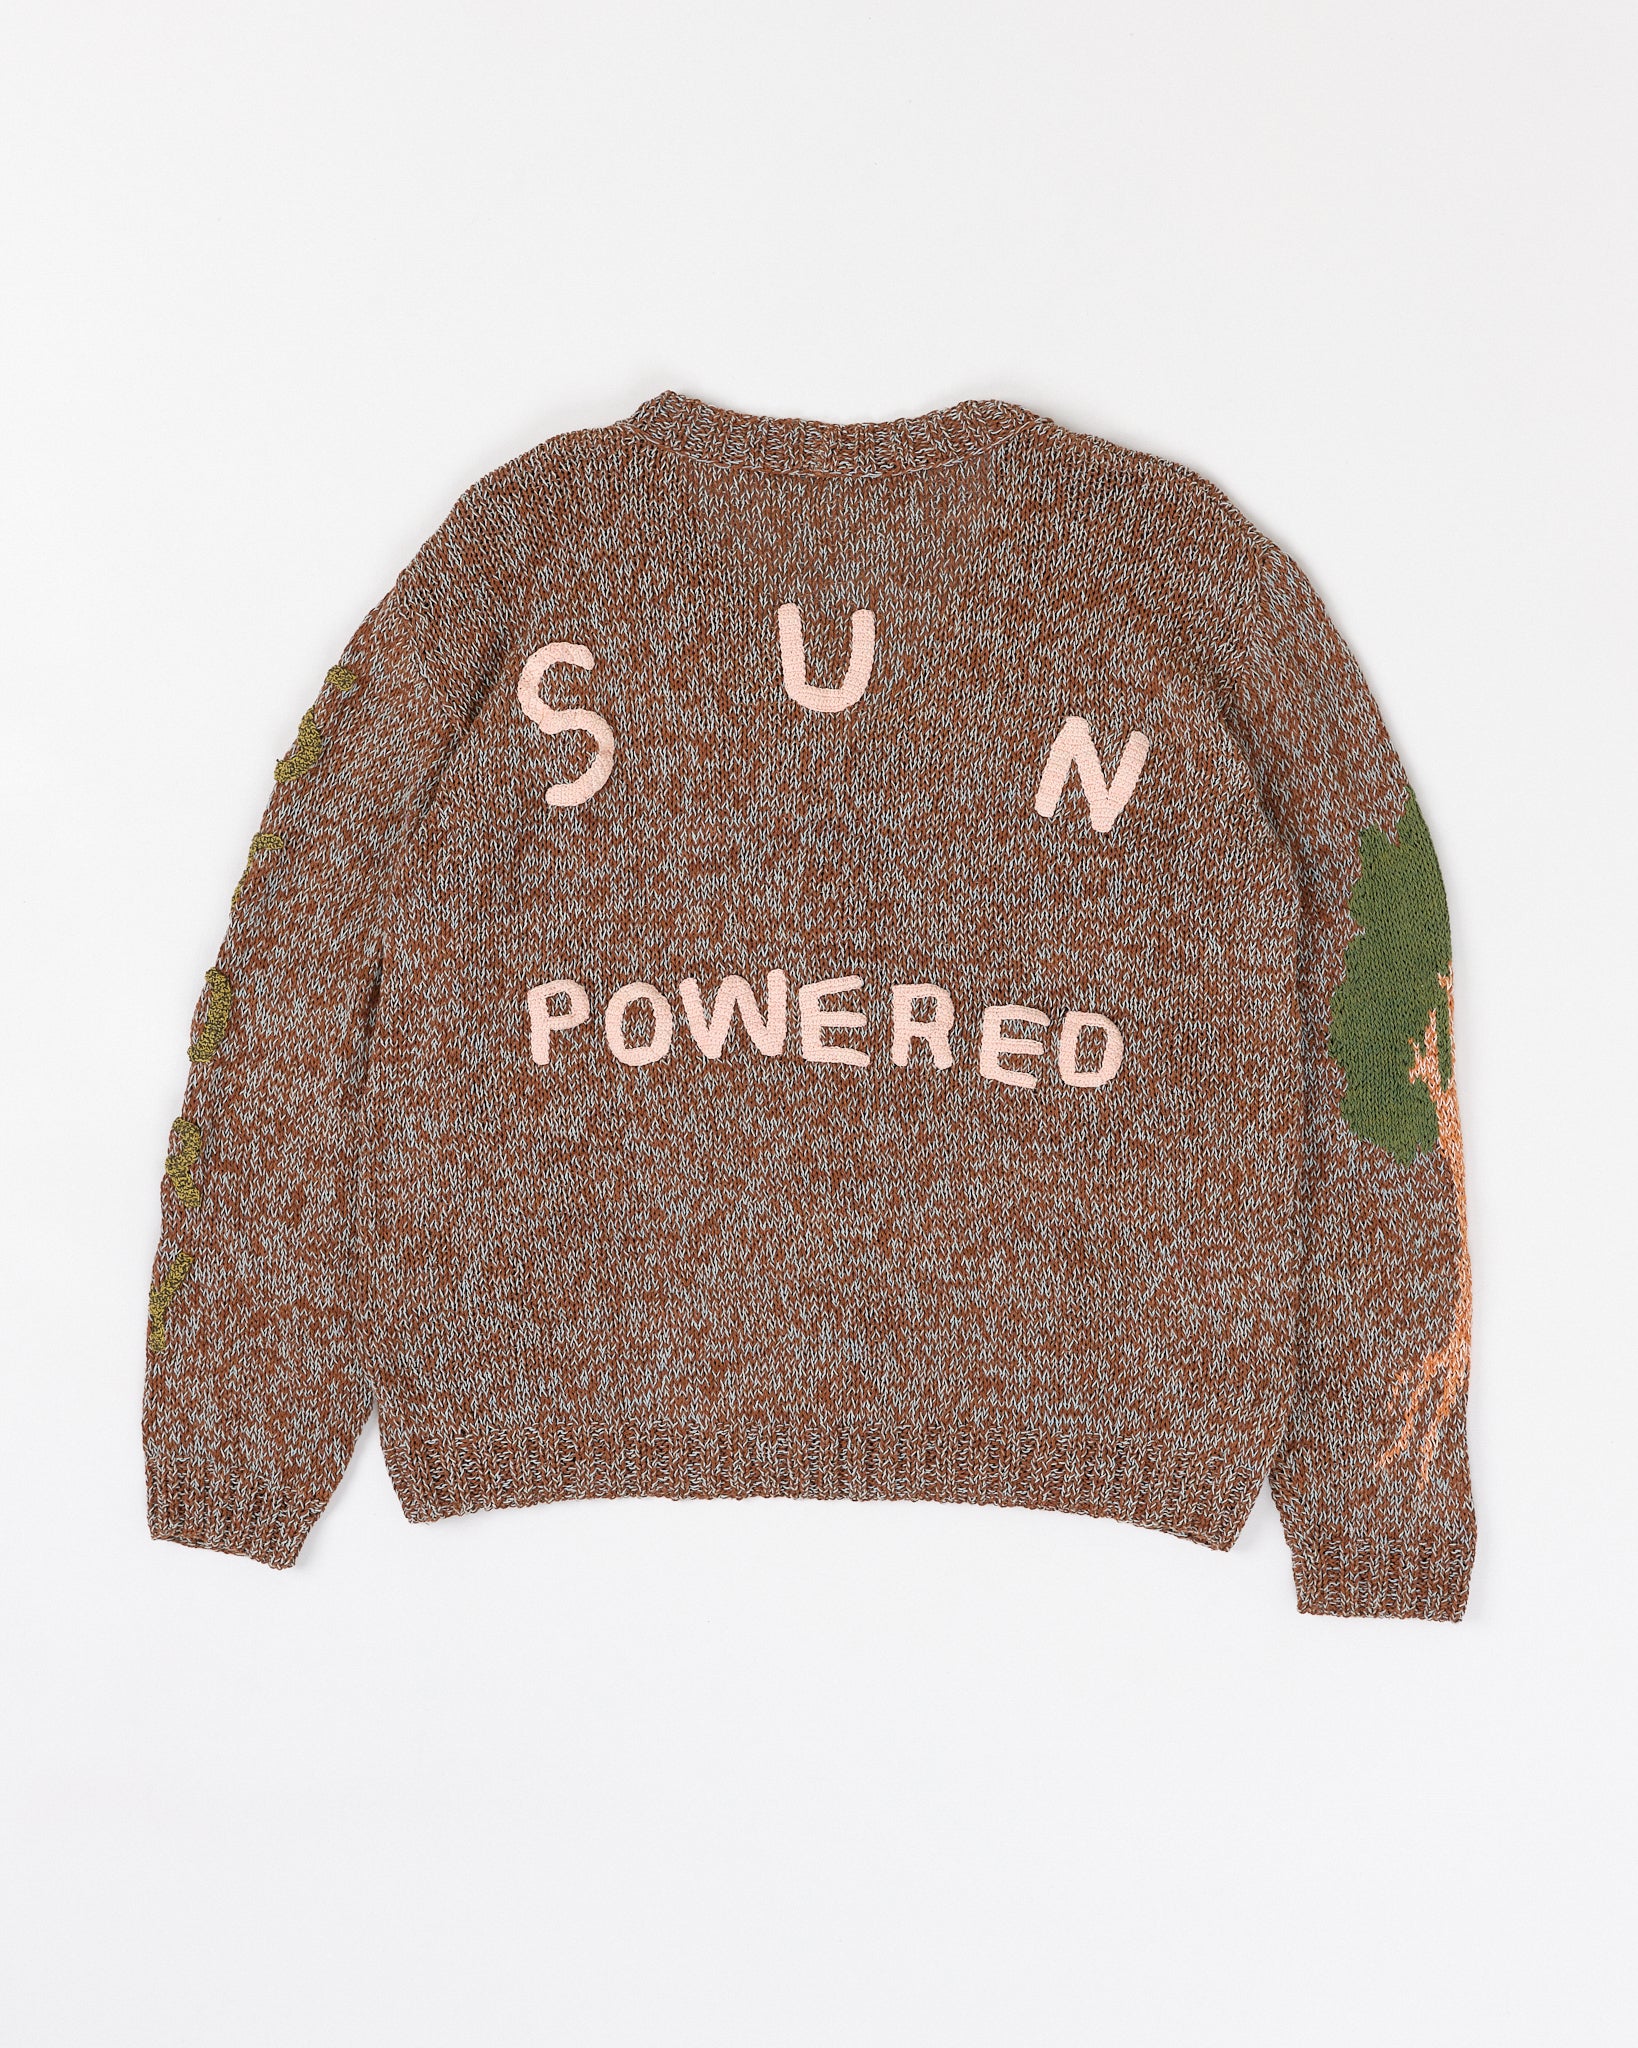 Twinsun Knit Cardigan - Brown Sun Powered